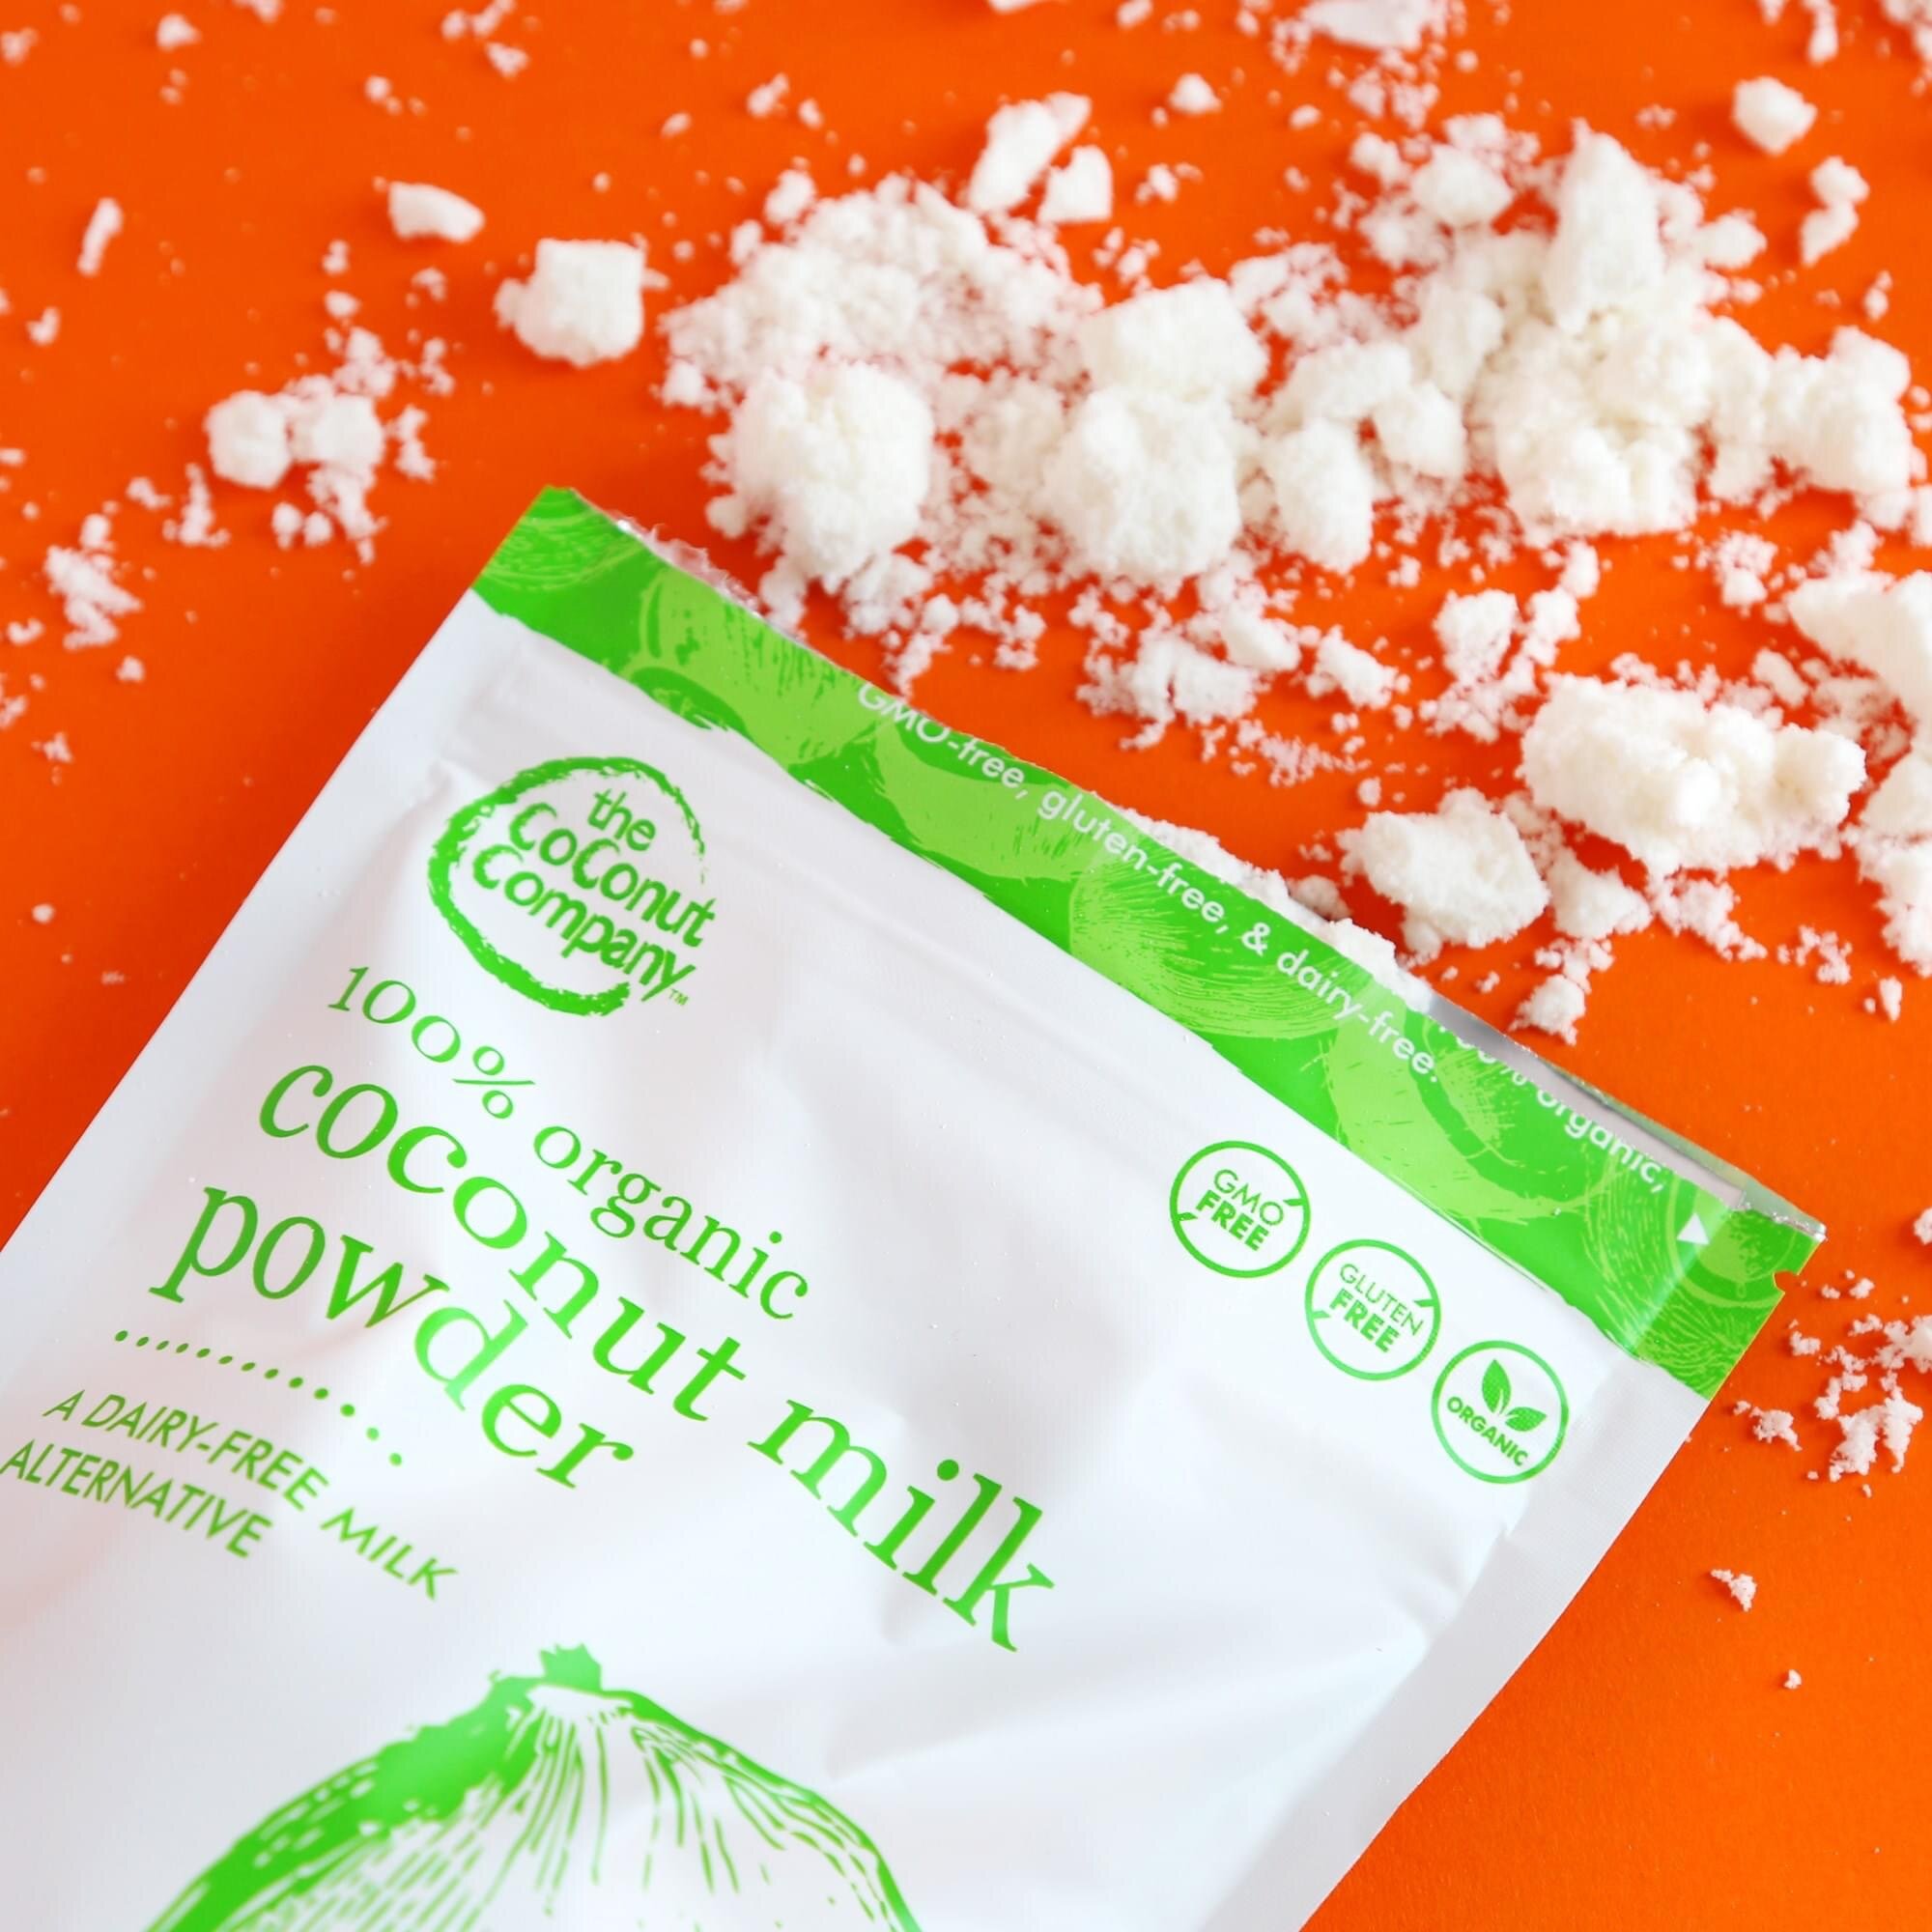 https://images.squarespace-cdn.com/content/v1/5c1074accc8fed6a4251da8f/1632827008699-B0EIV7KXOQ6KRY24TT3L/Organic+dairy-free+coconut+milk+powder